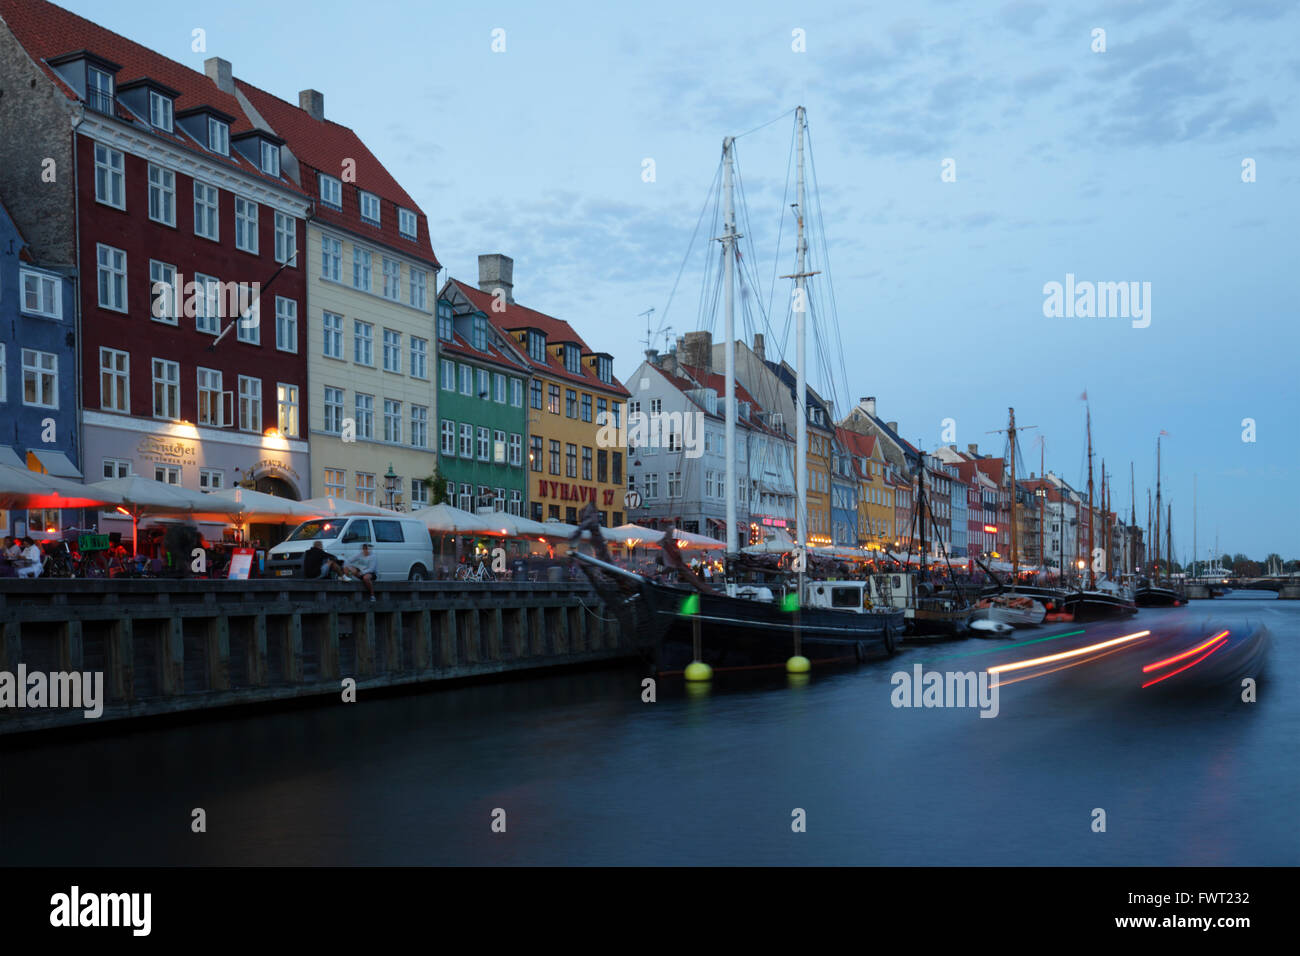 Nyhavn canal in Copenhagen, Denmark Stock Photo